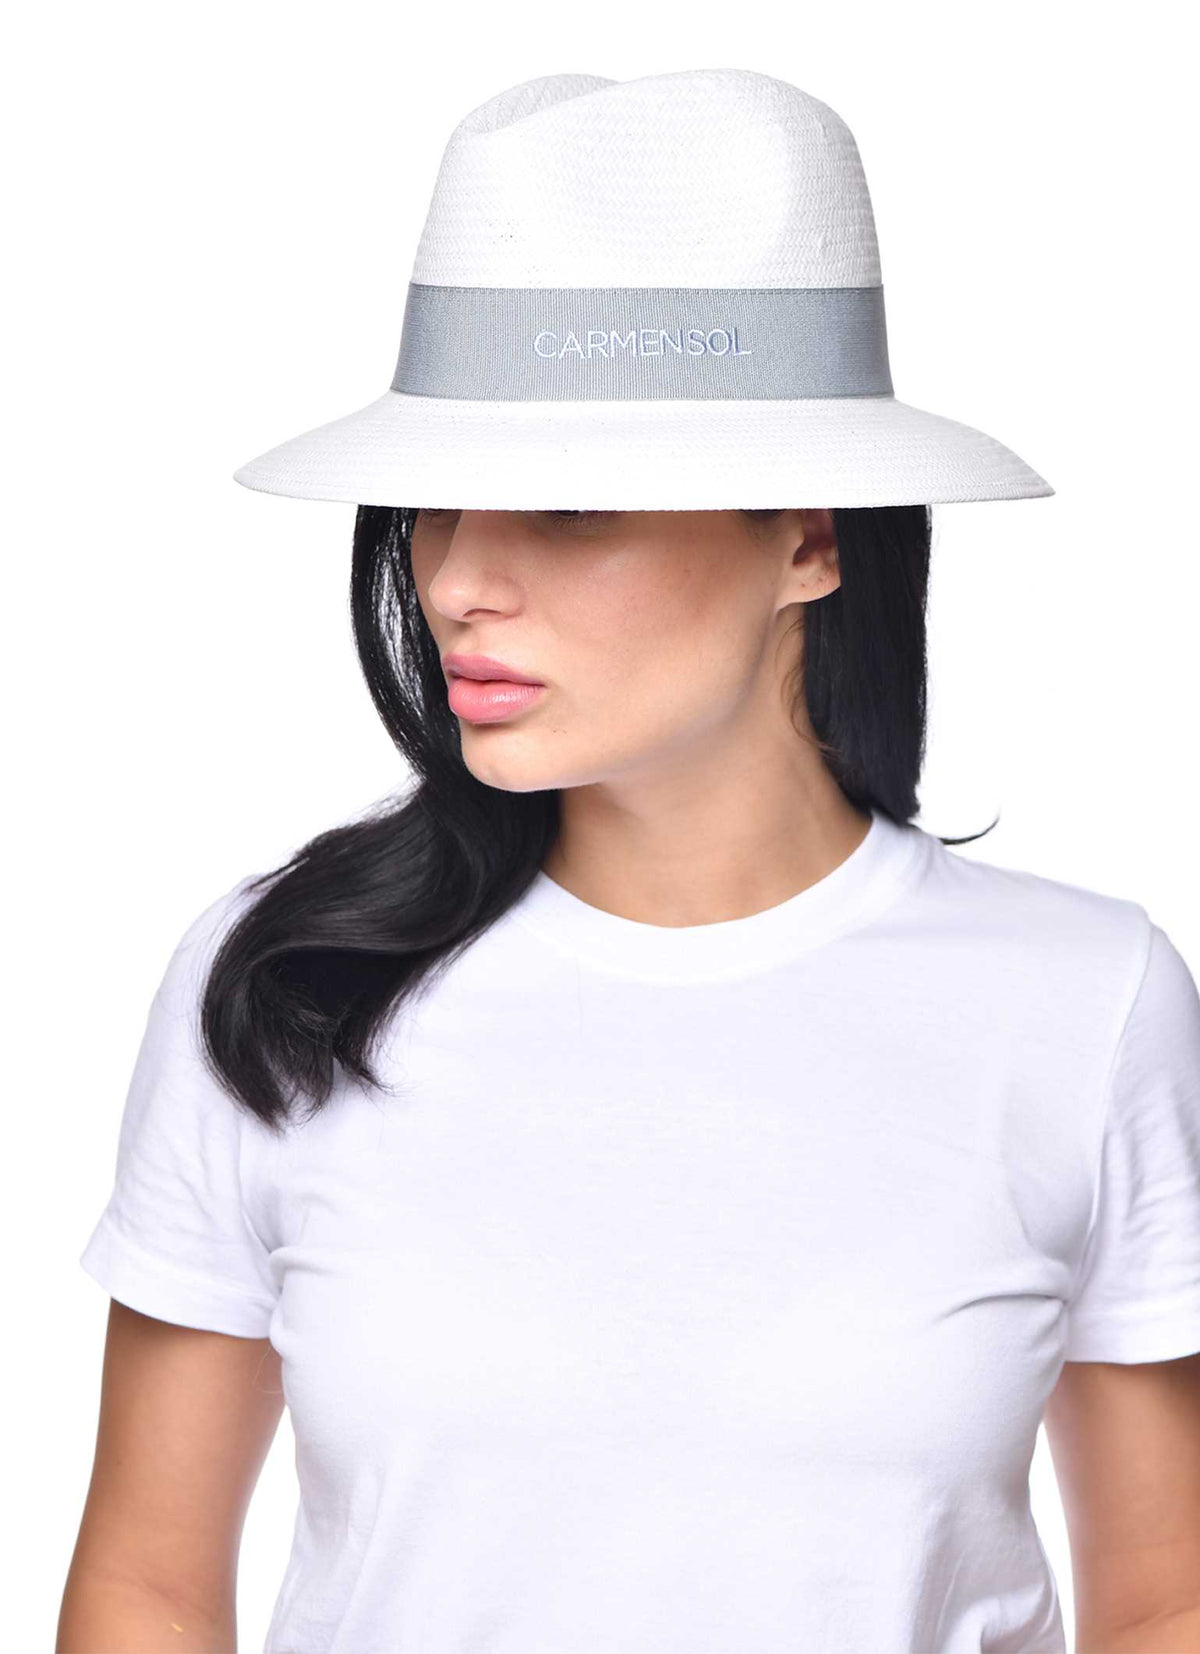 Women wearing Carmen Sol Dolores 2 packable beach hat in color grey